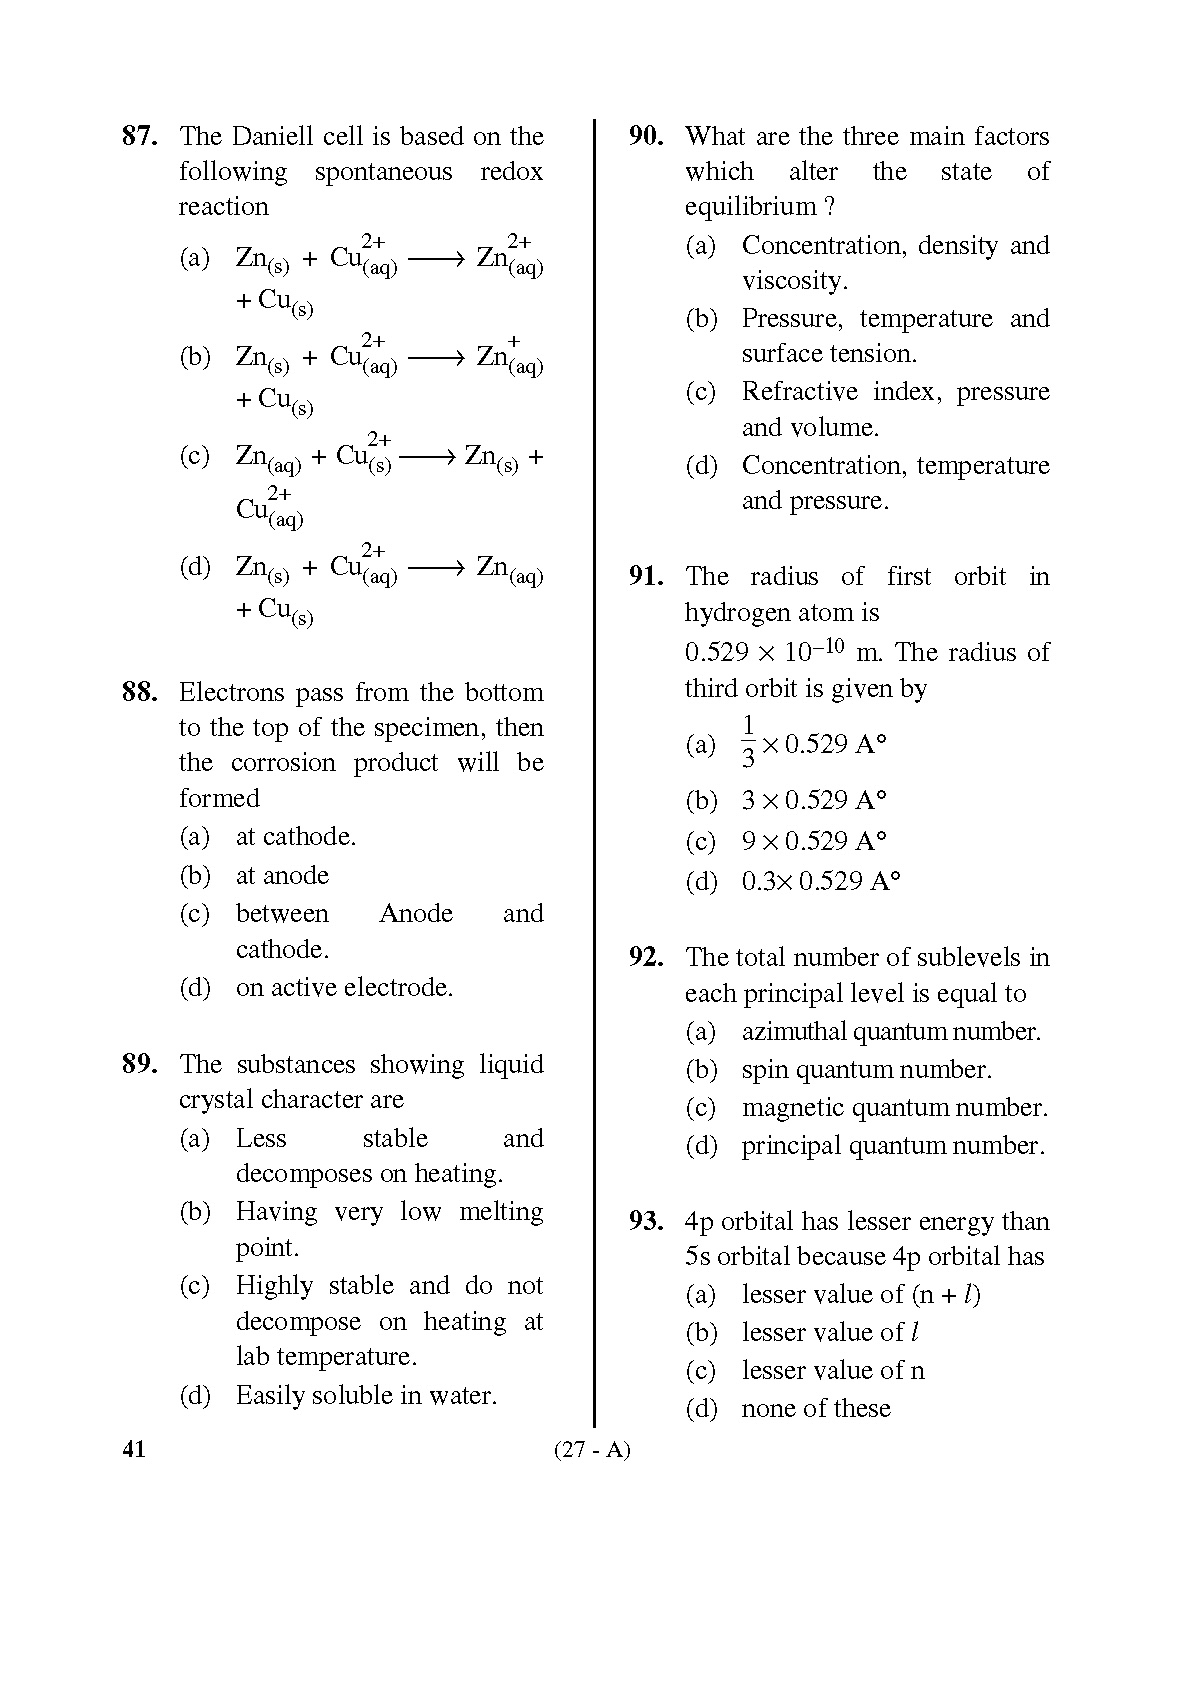 Karnataka PSC Drugs Analyst Chemistry Exam Sample Question Paper 27